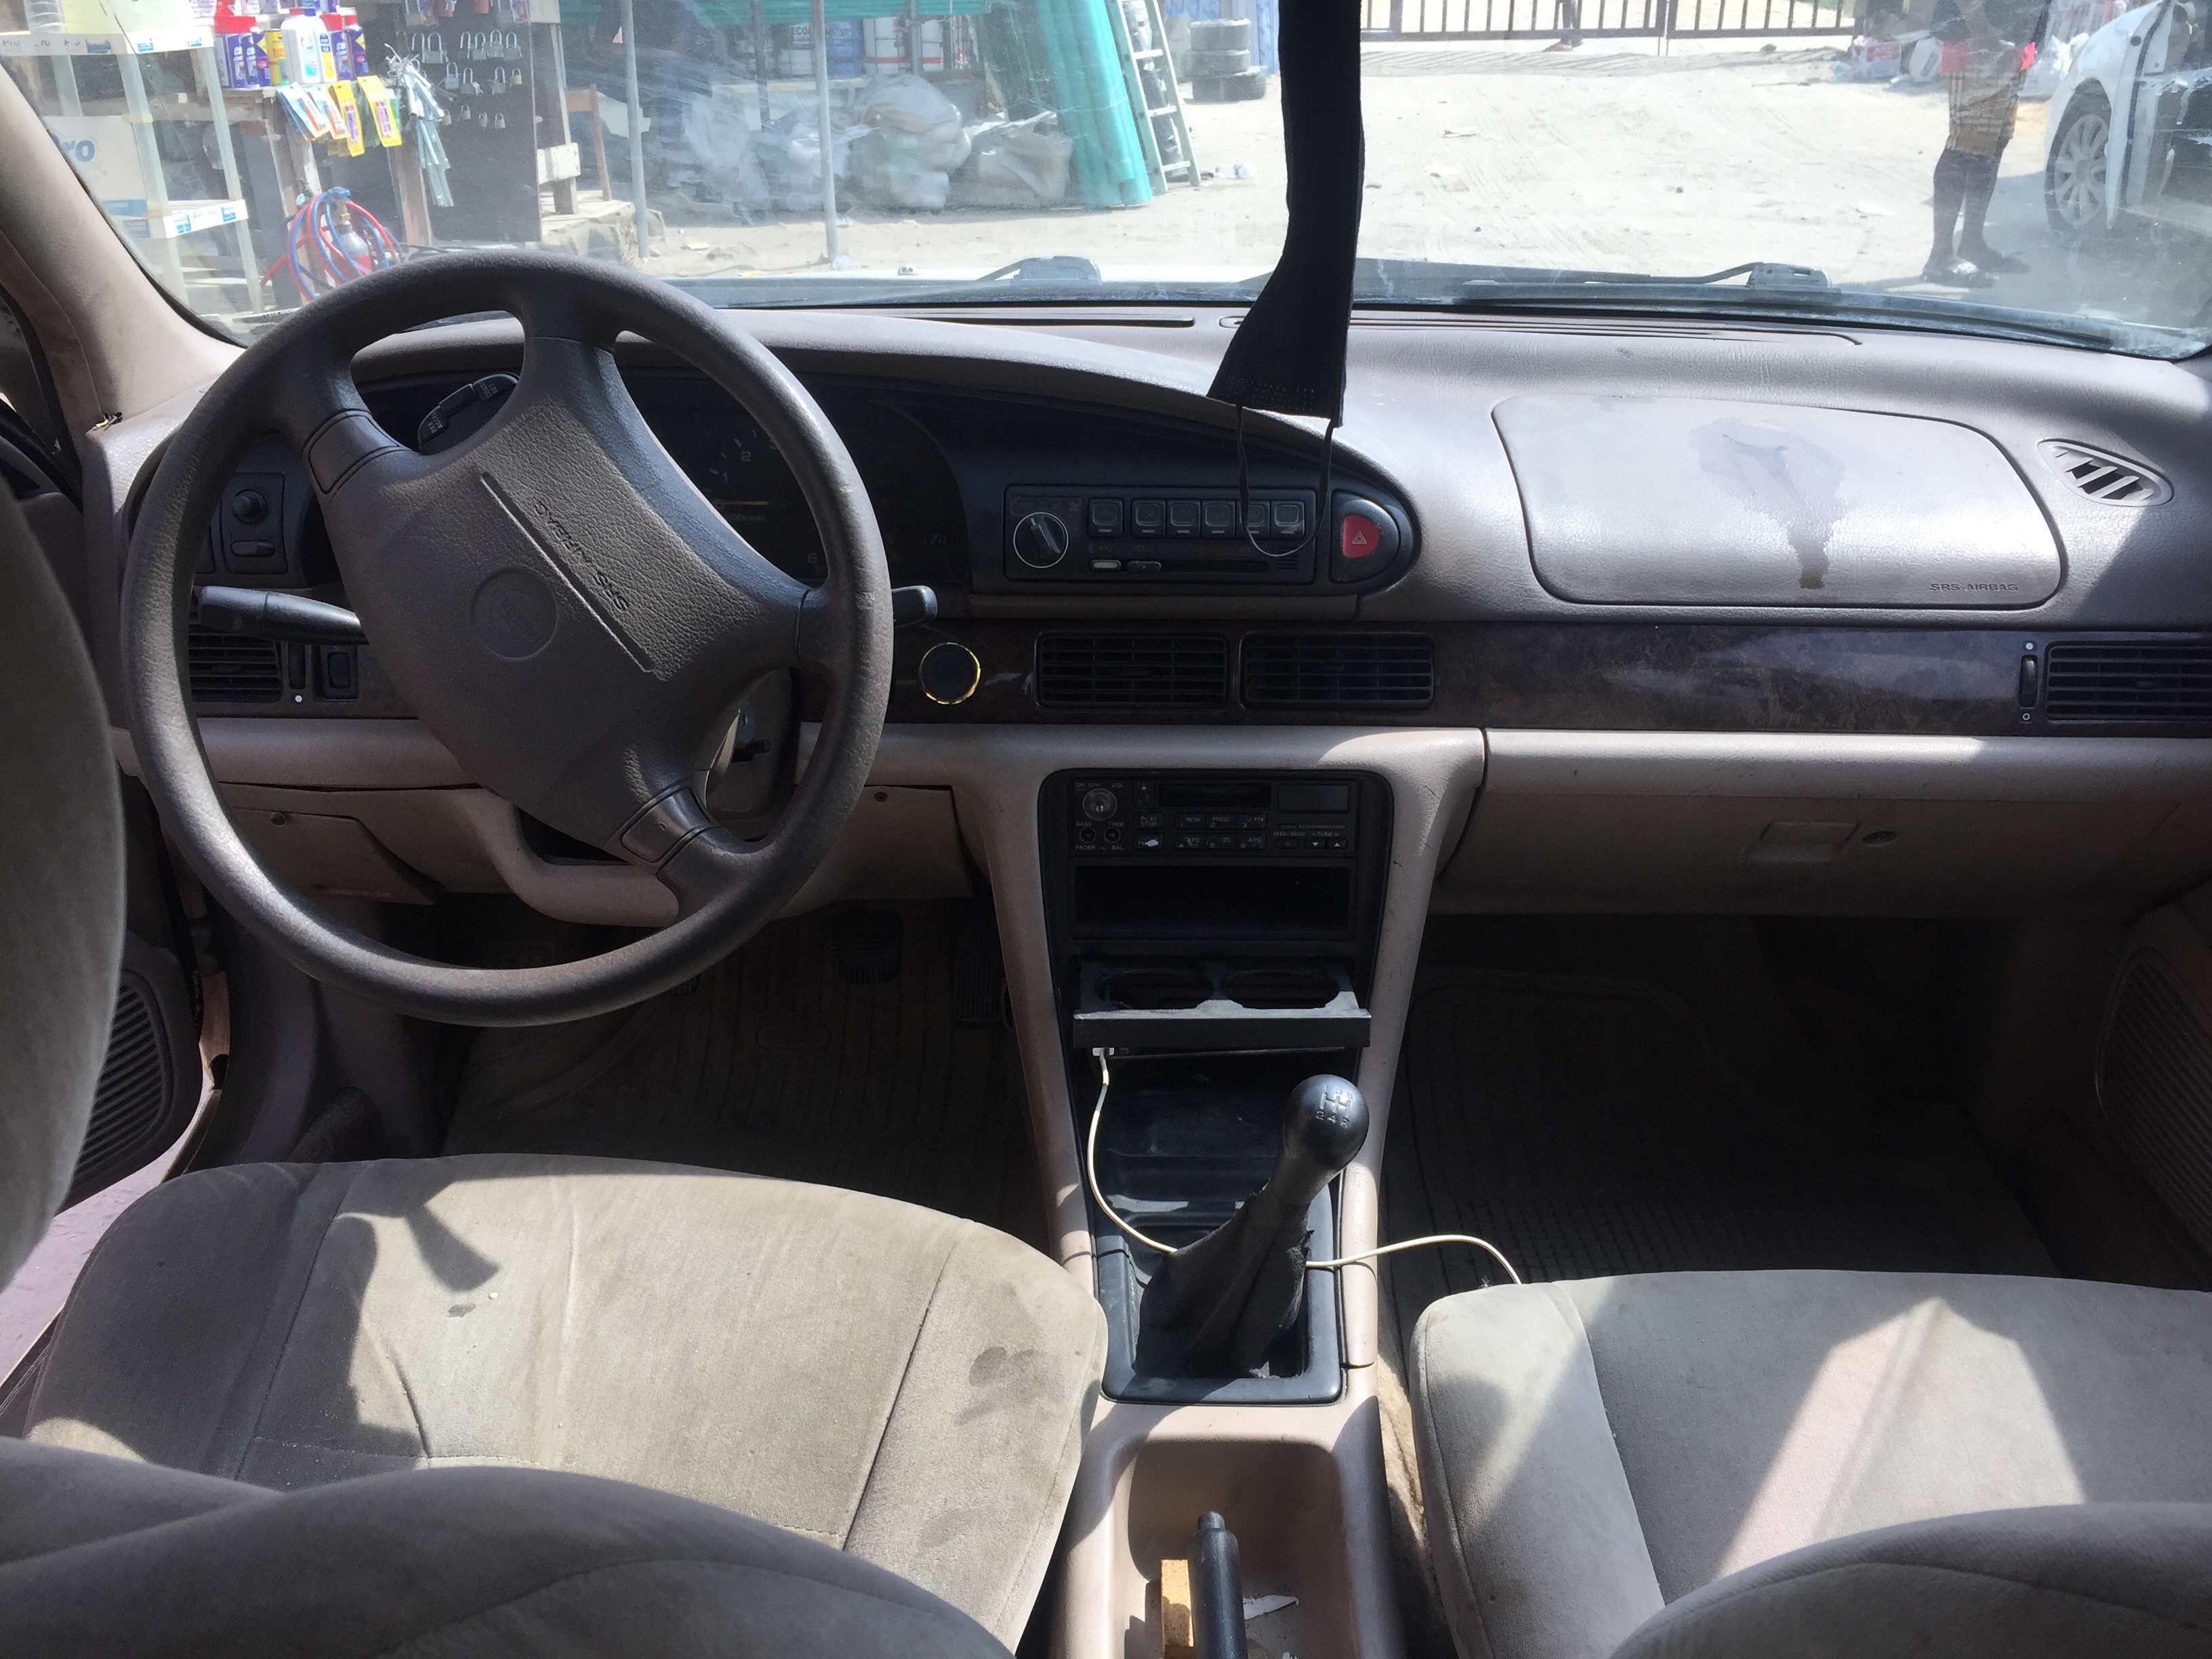 Buy 1997 used Nissan Altima Lagos